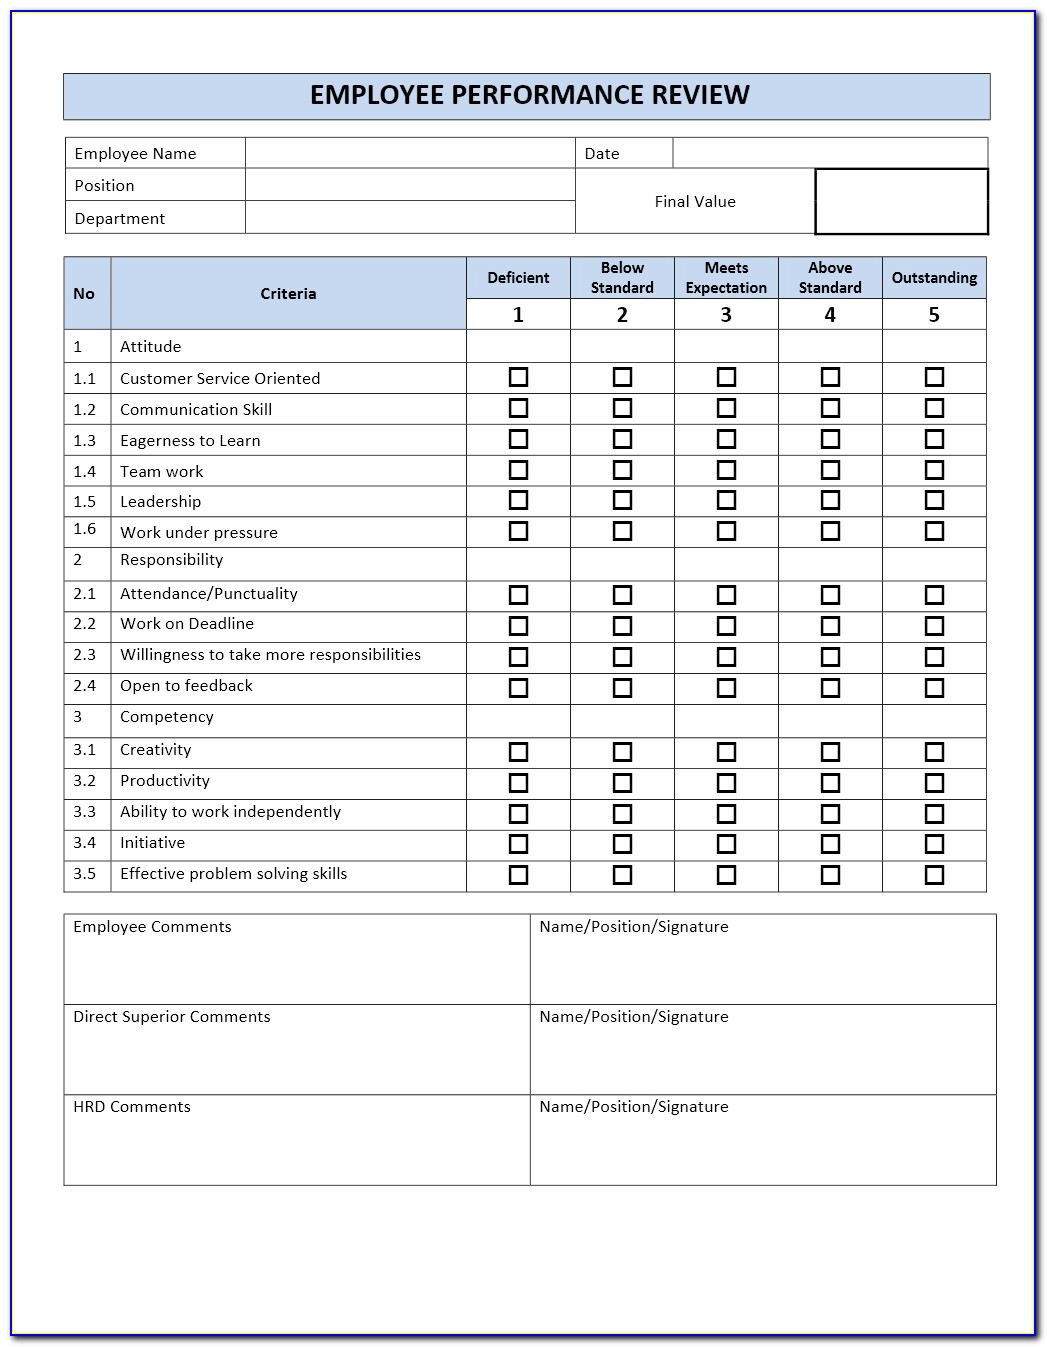 Employee Evaluation Form Templates The BestWebsite